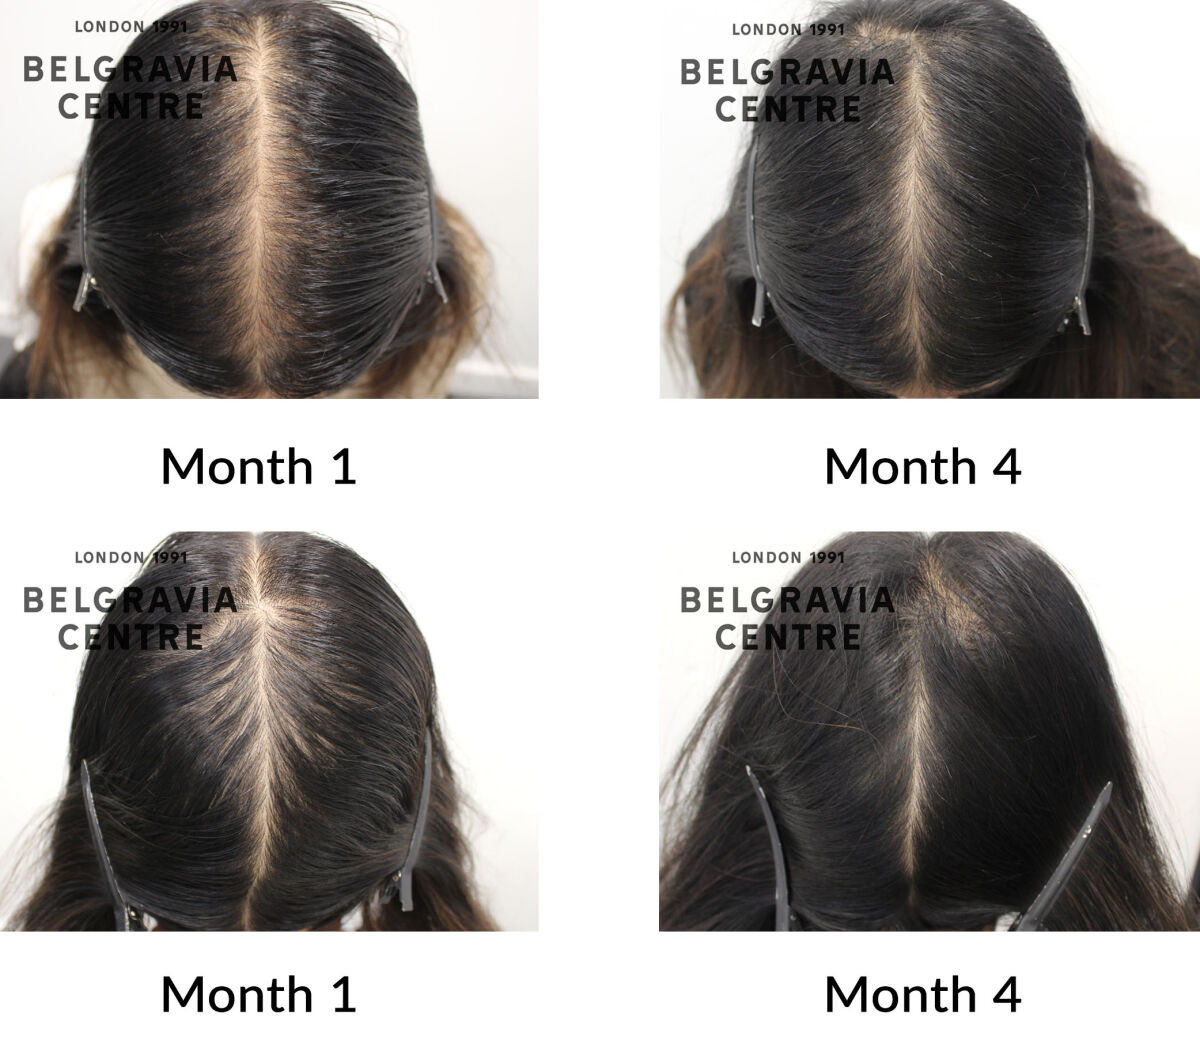 female pattern hair loss and telogen effluvium the belgravia centre 450814